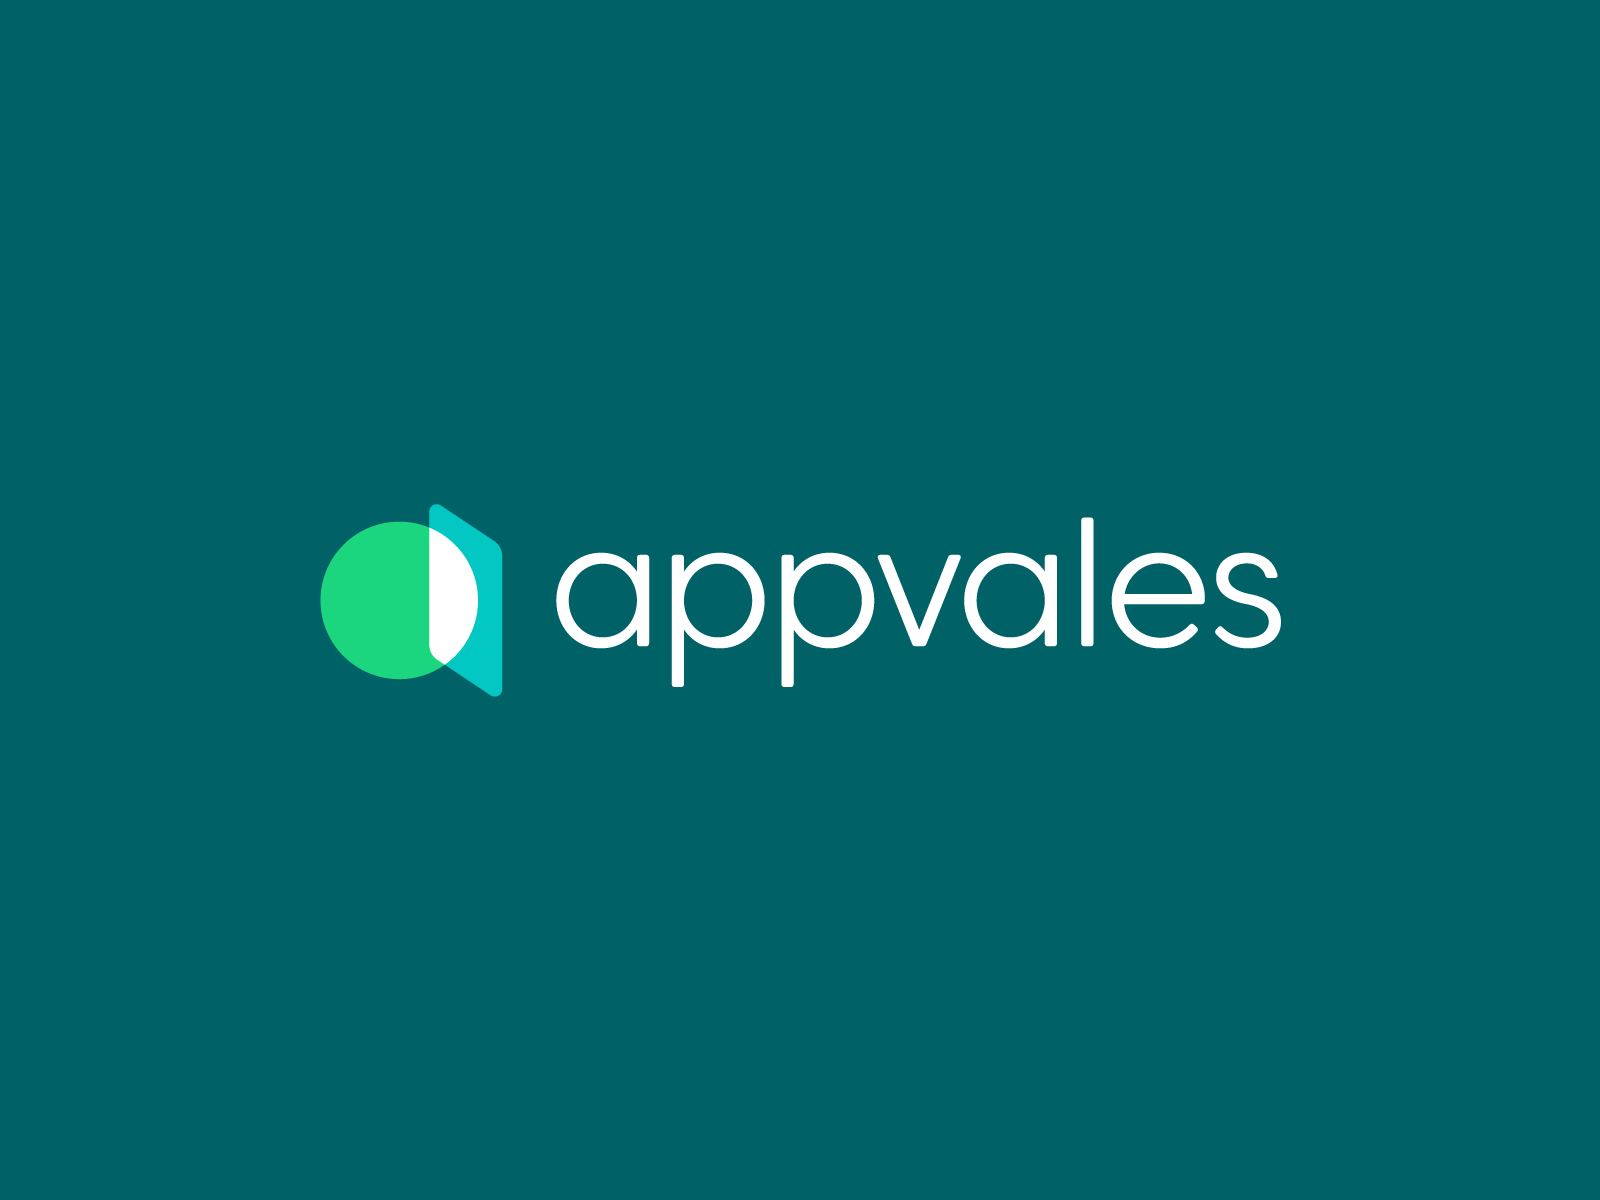 Appvales – Brand Identity / Logo Design